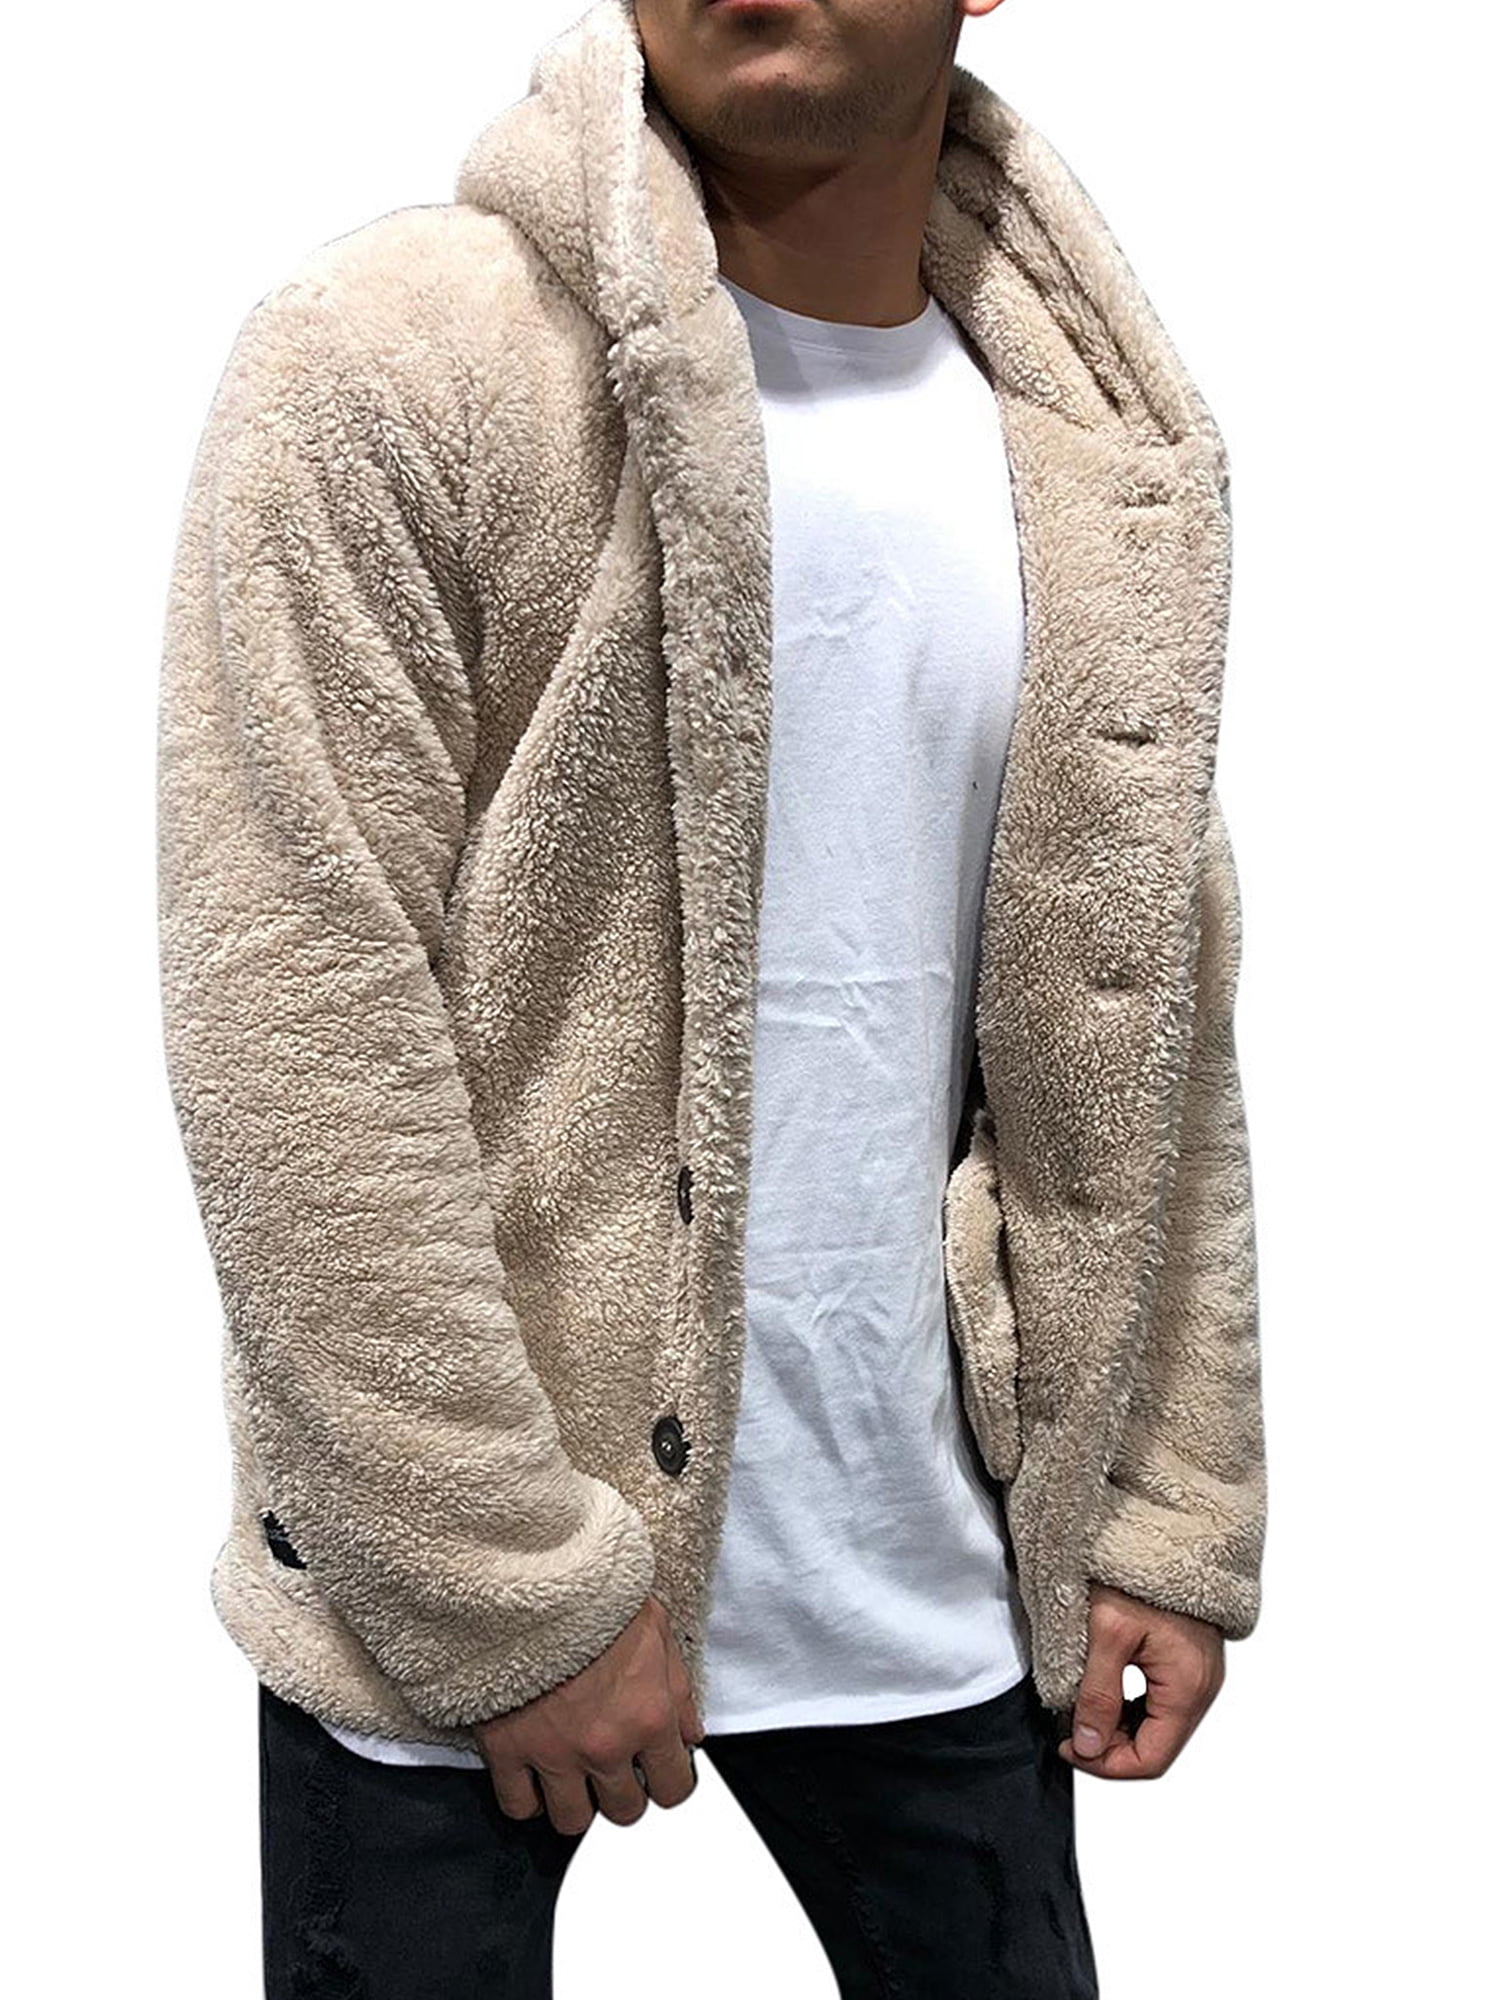 poriff Mens Sherpa Fleece Pullover Sweatshirt Jacket Button Collar Warm Sweater Coat